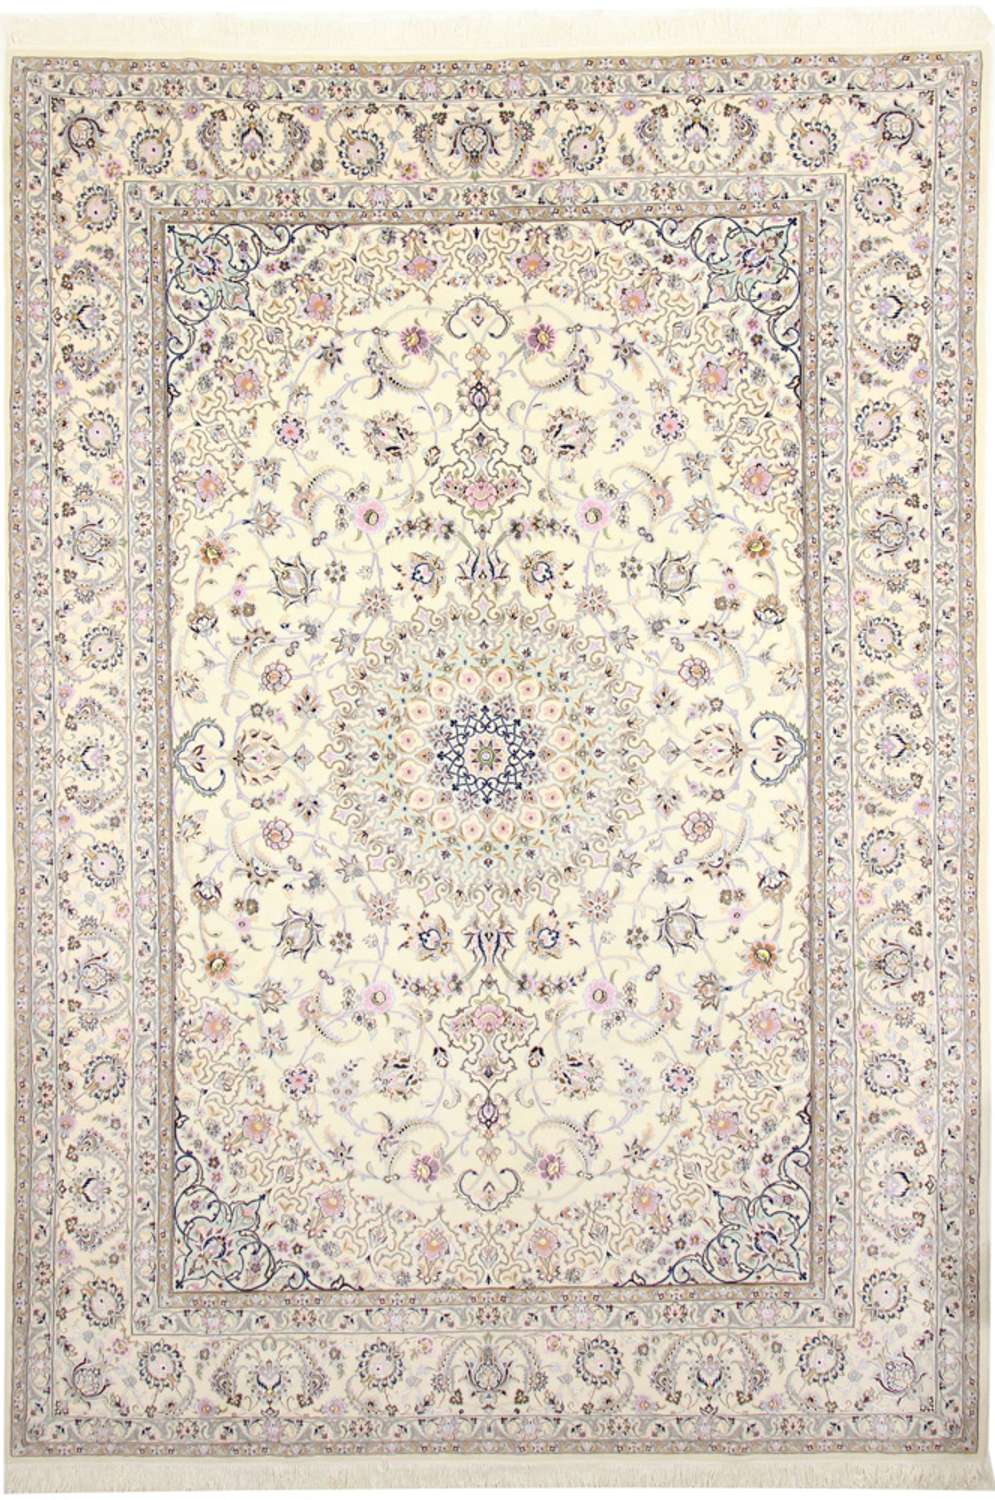 Dywan perski - Nain - Królewski - 365 x 250 cm - kremowy